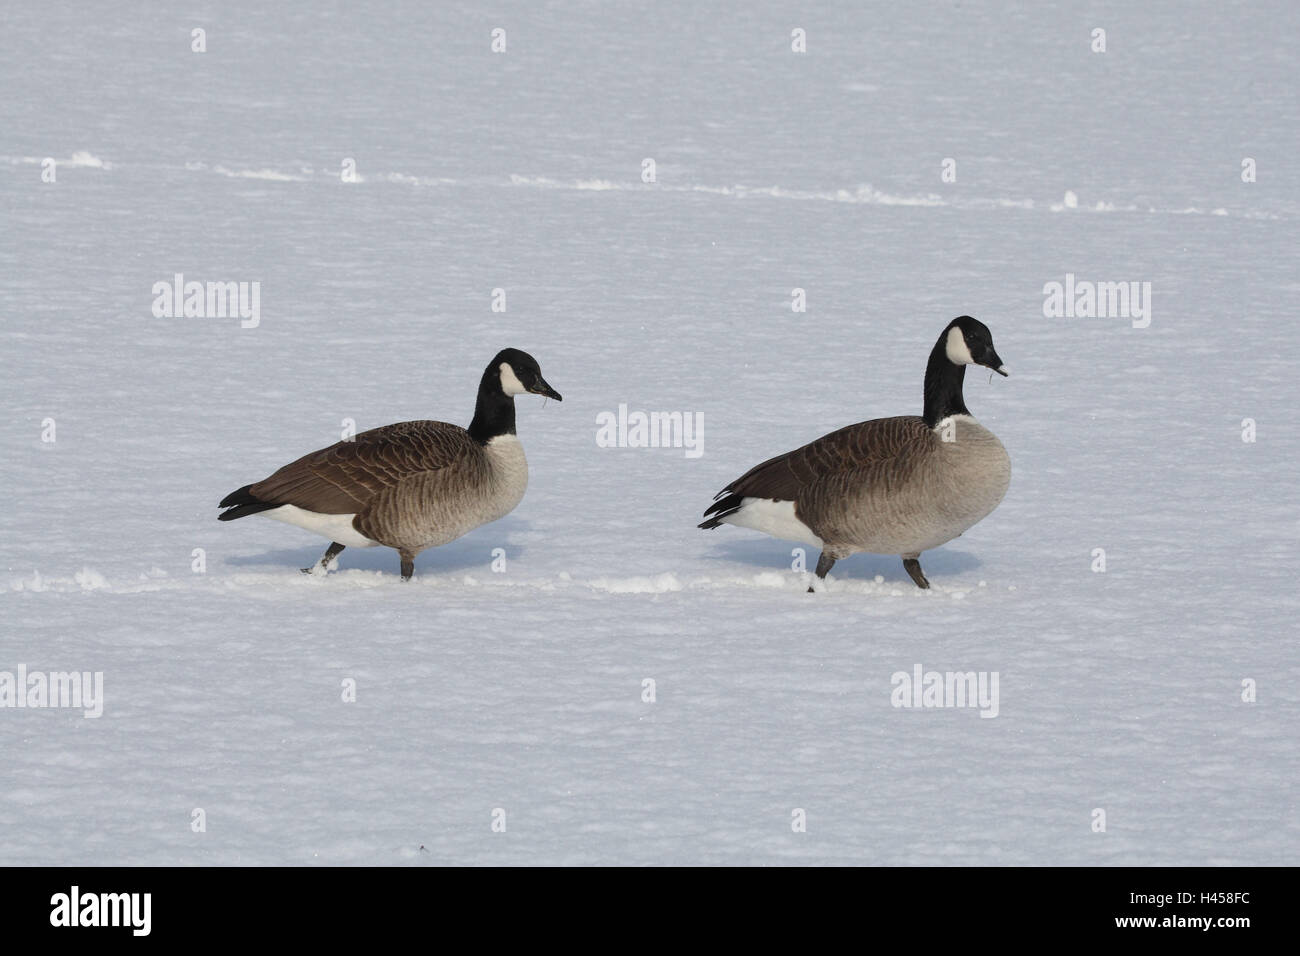 Canada goose, Branta canadensis, winter, snow, Stock Photo